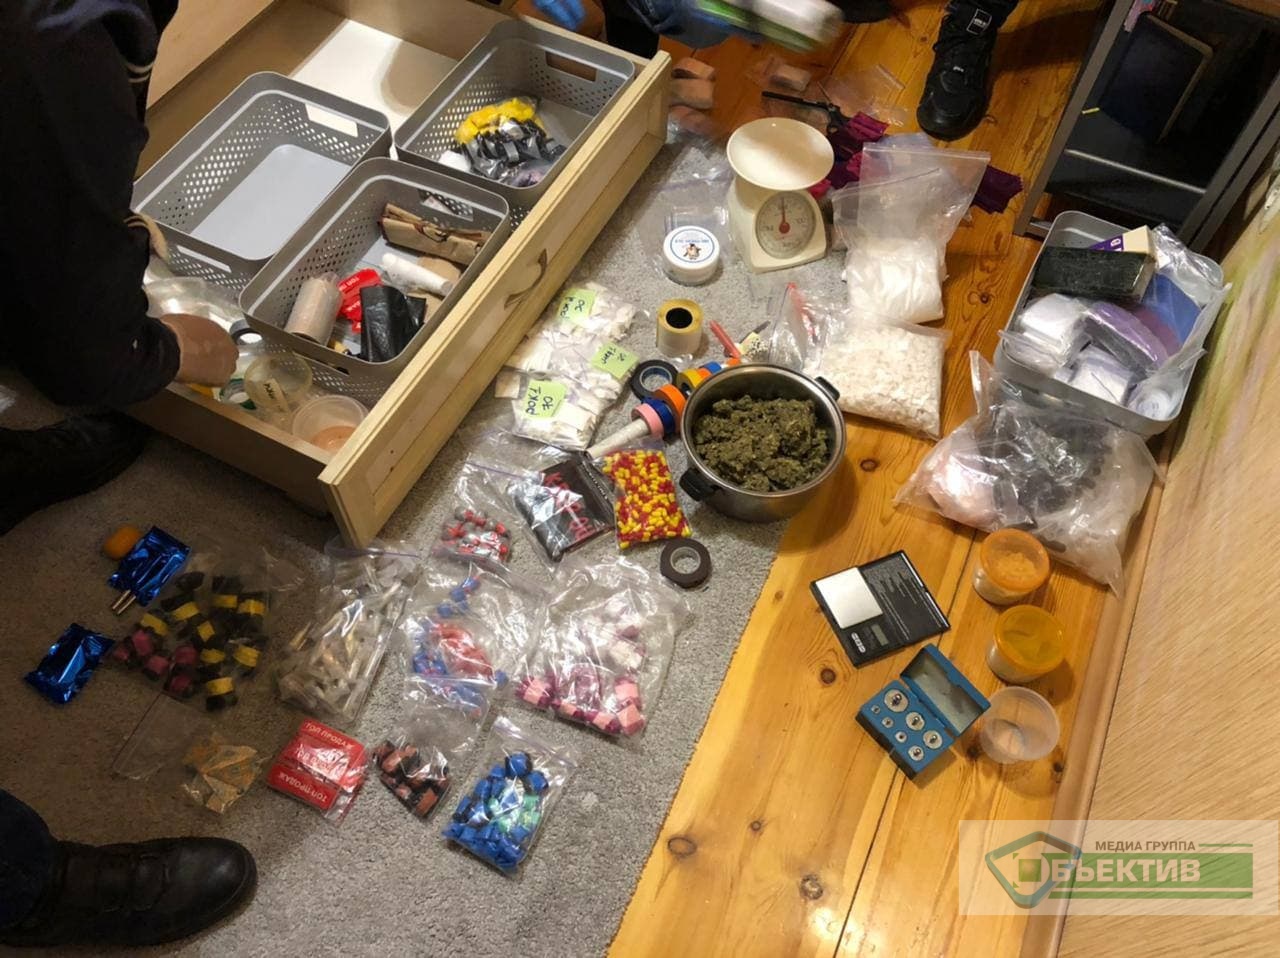 У 32-летней харьковчанки нашли кокаин и другие наркотики на 15 миллионов гривен (фото)